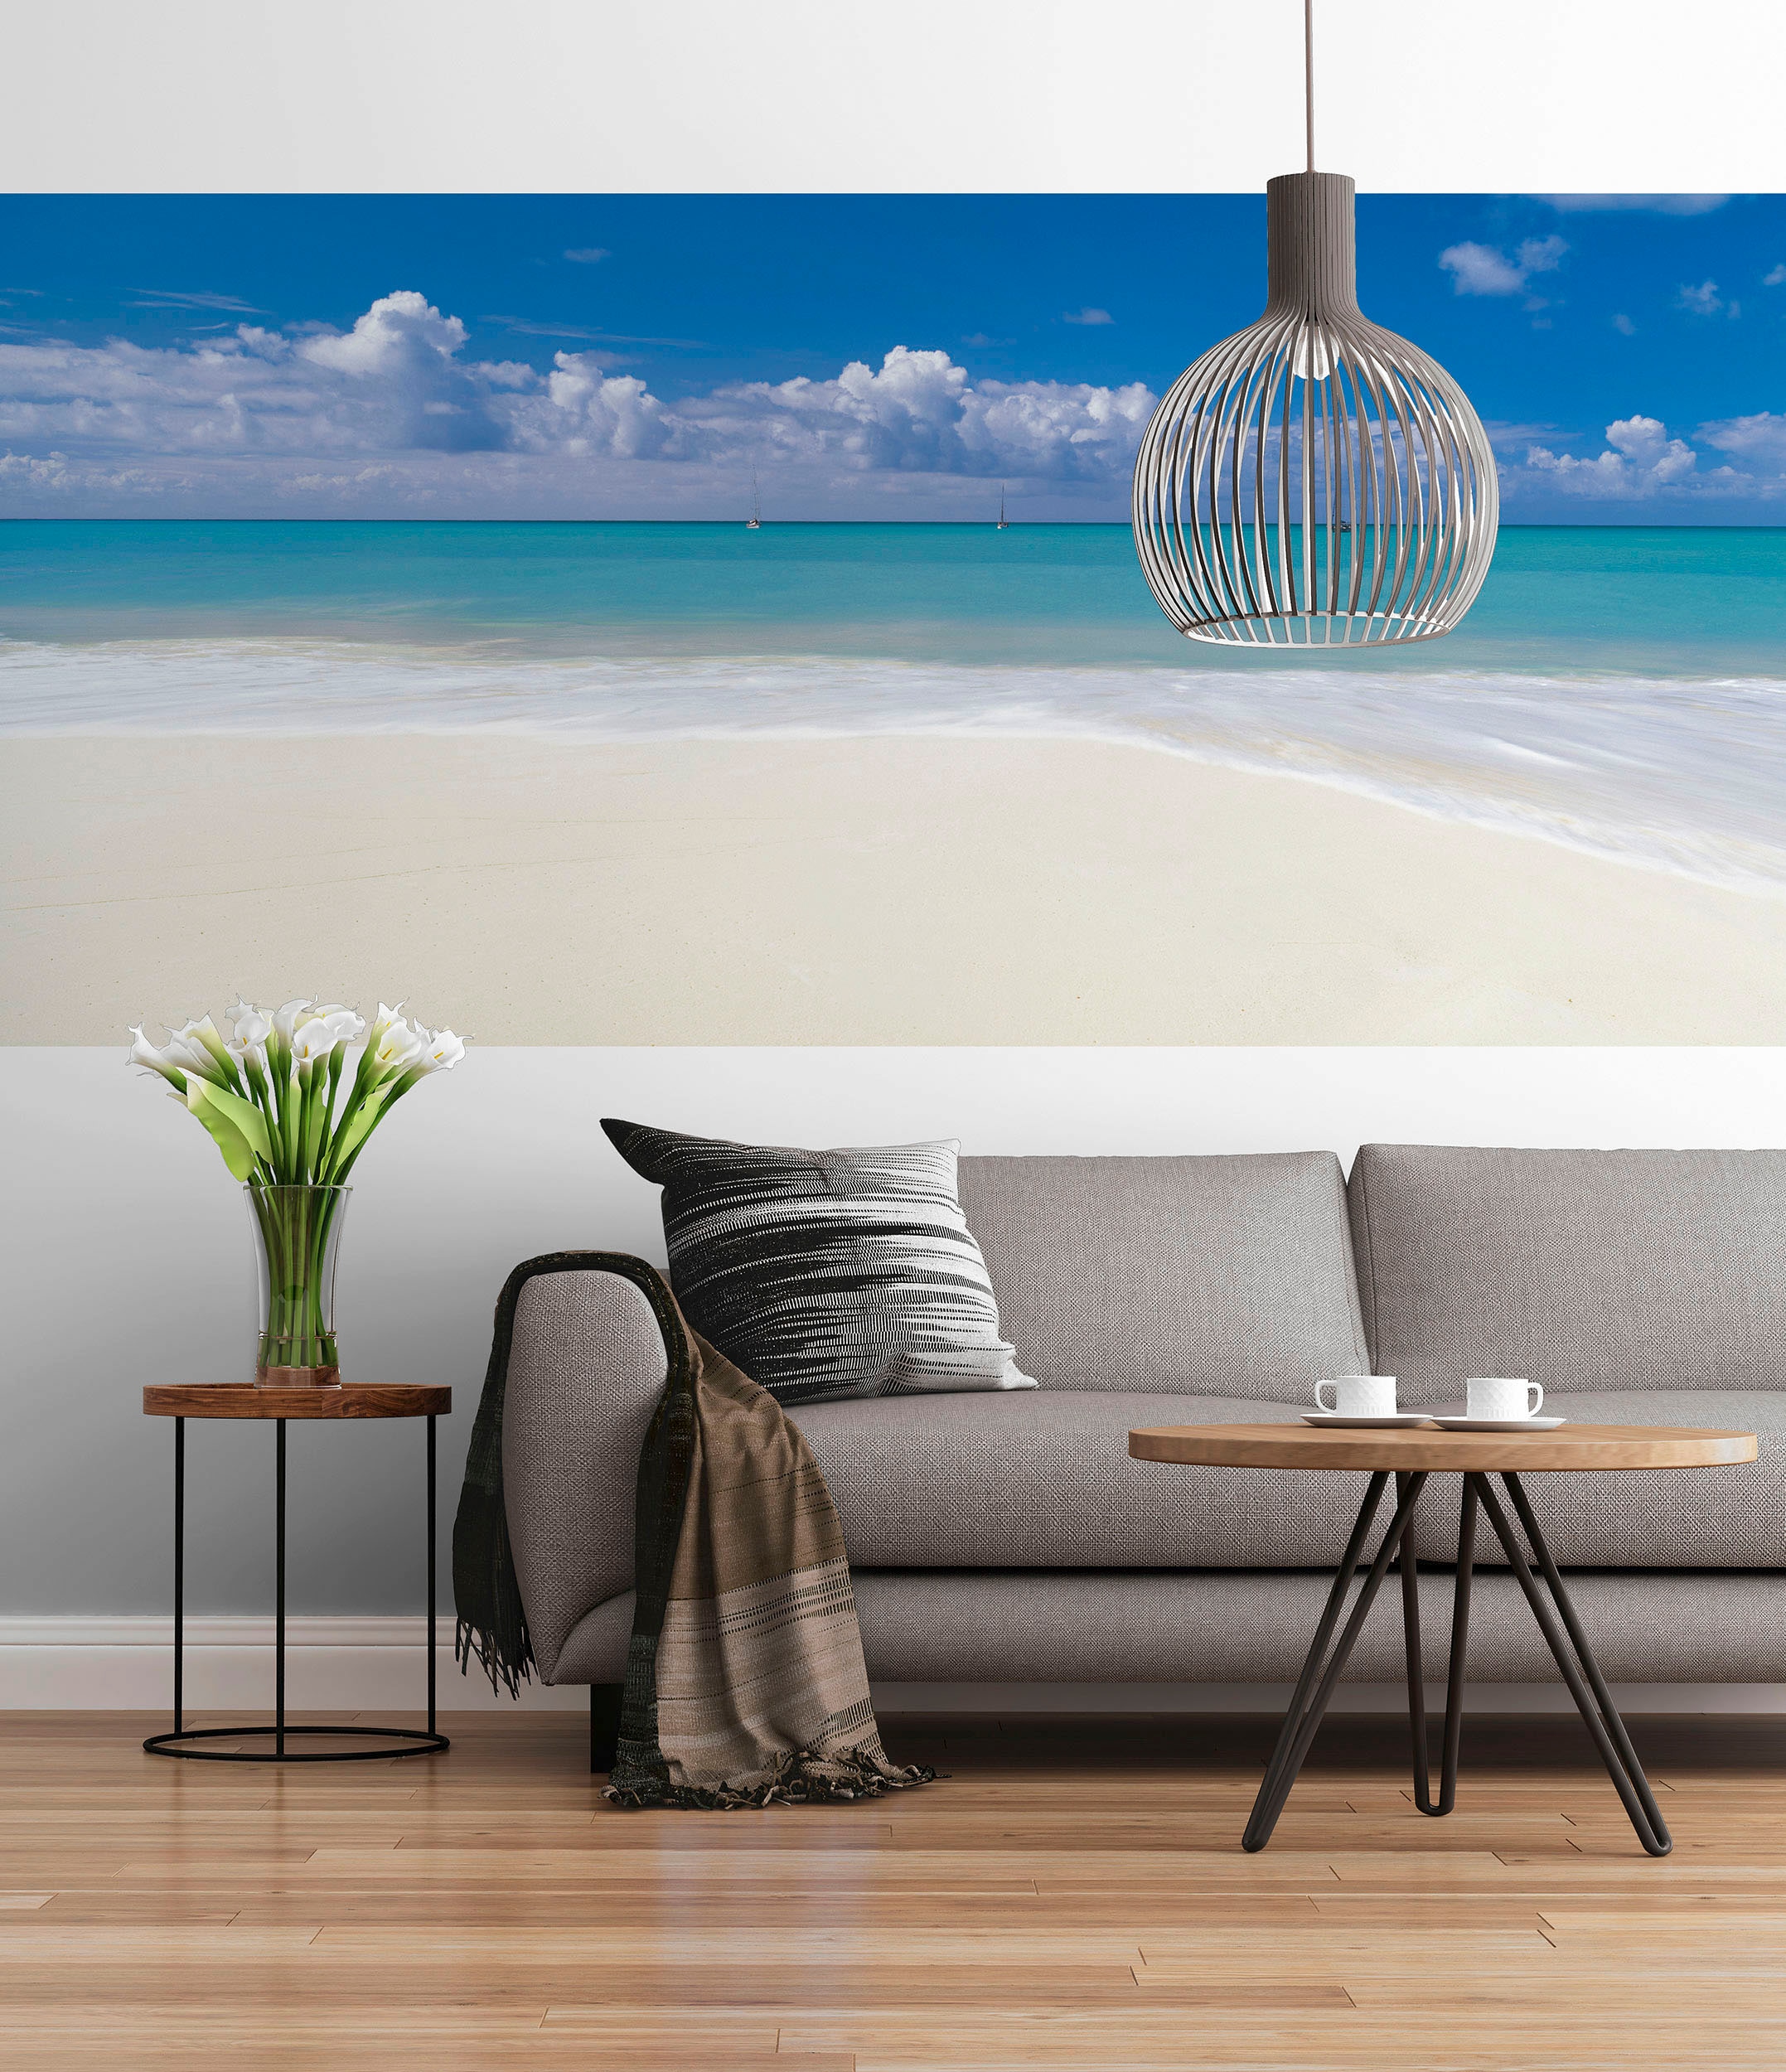 Fototapete »Fototapete - Deserted Beach - Größe 368 x 127 cm«, bedruckt